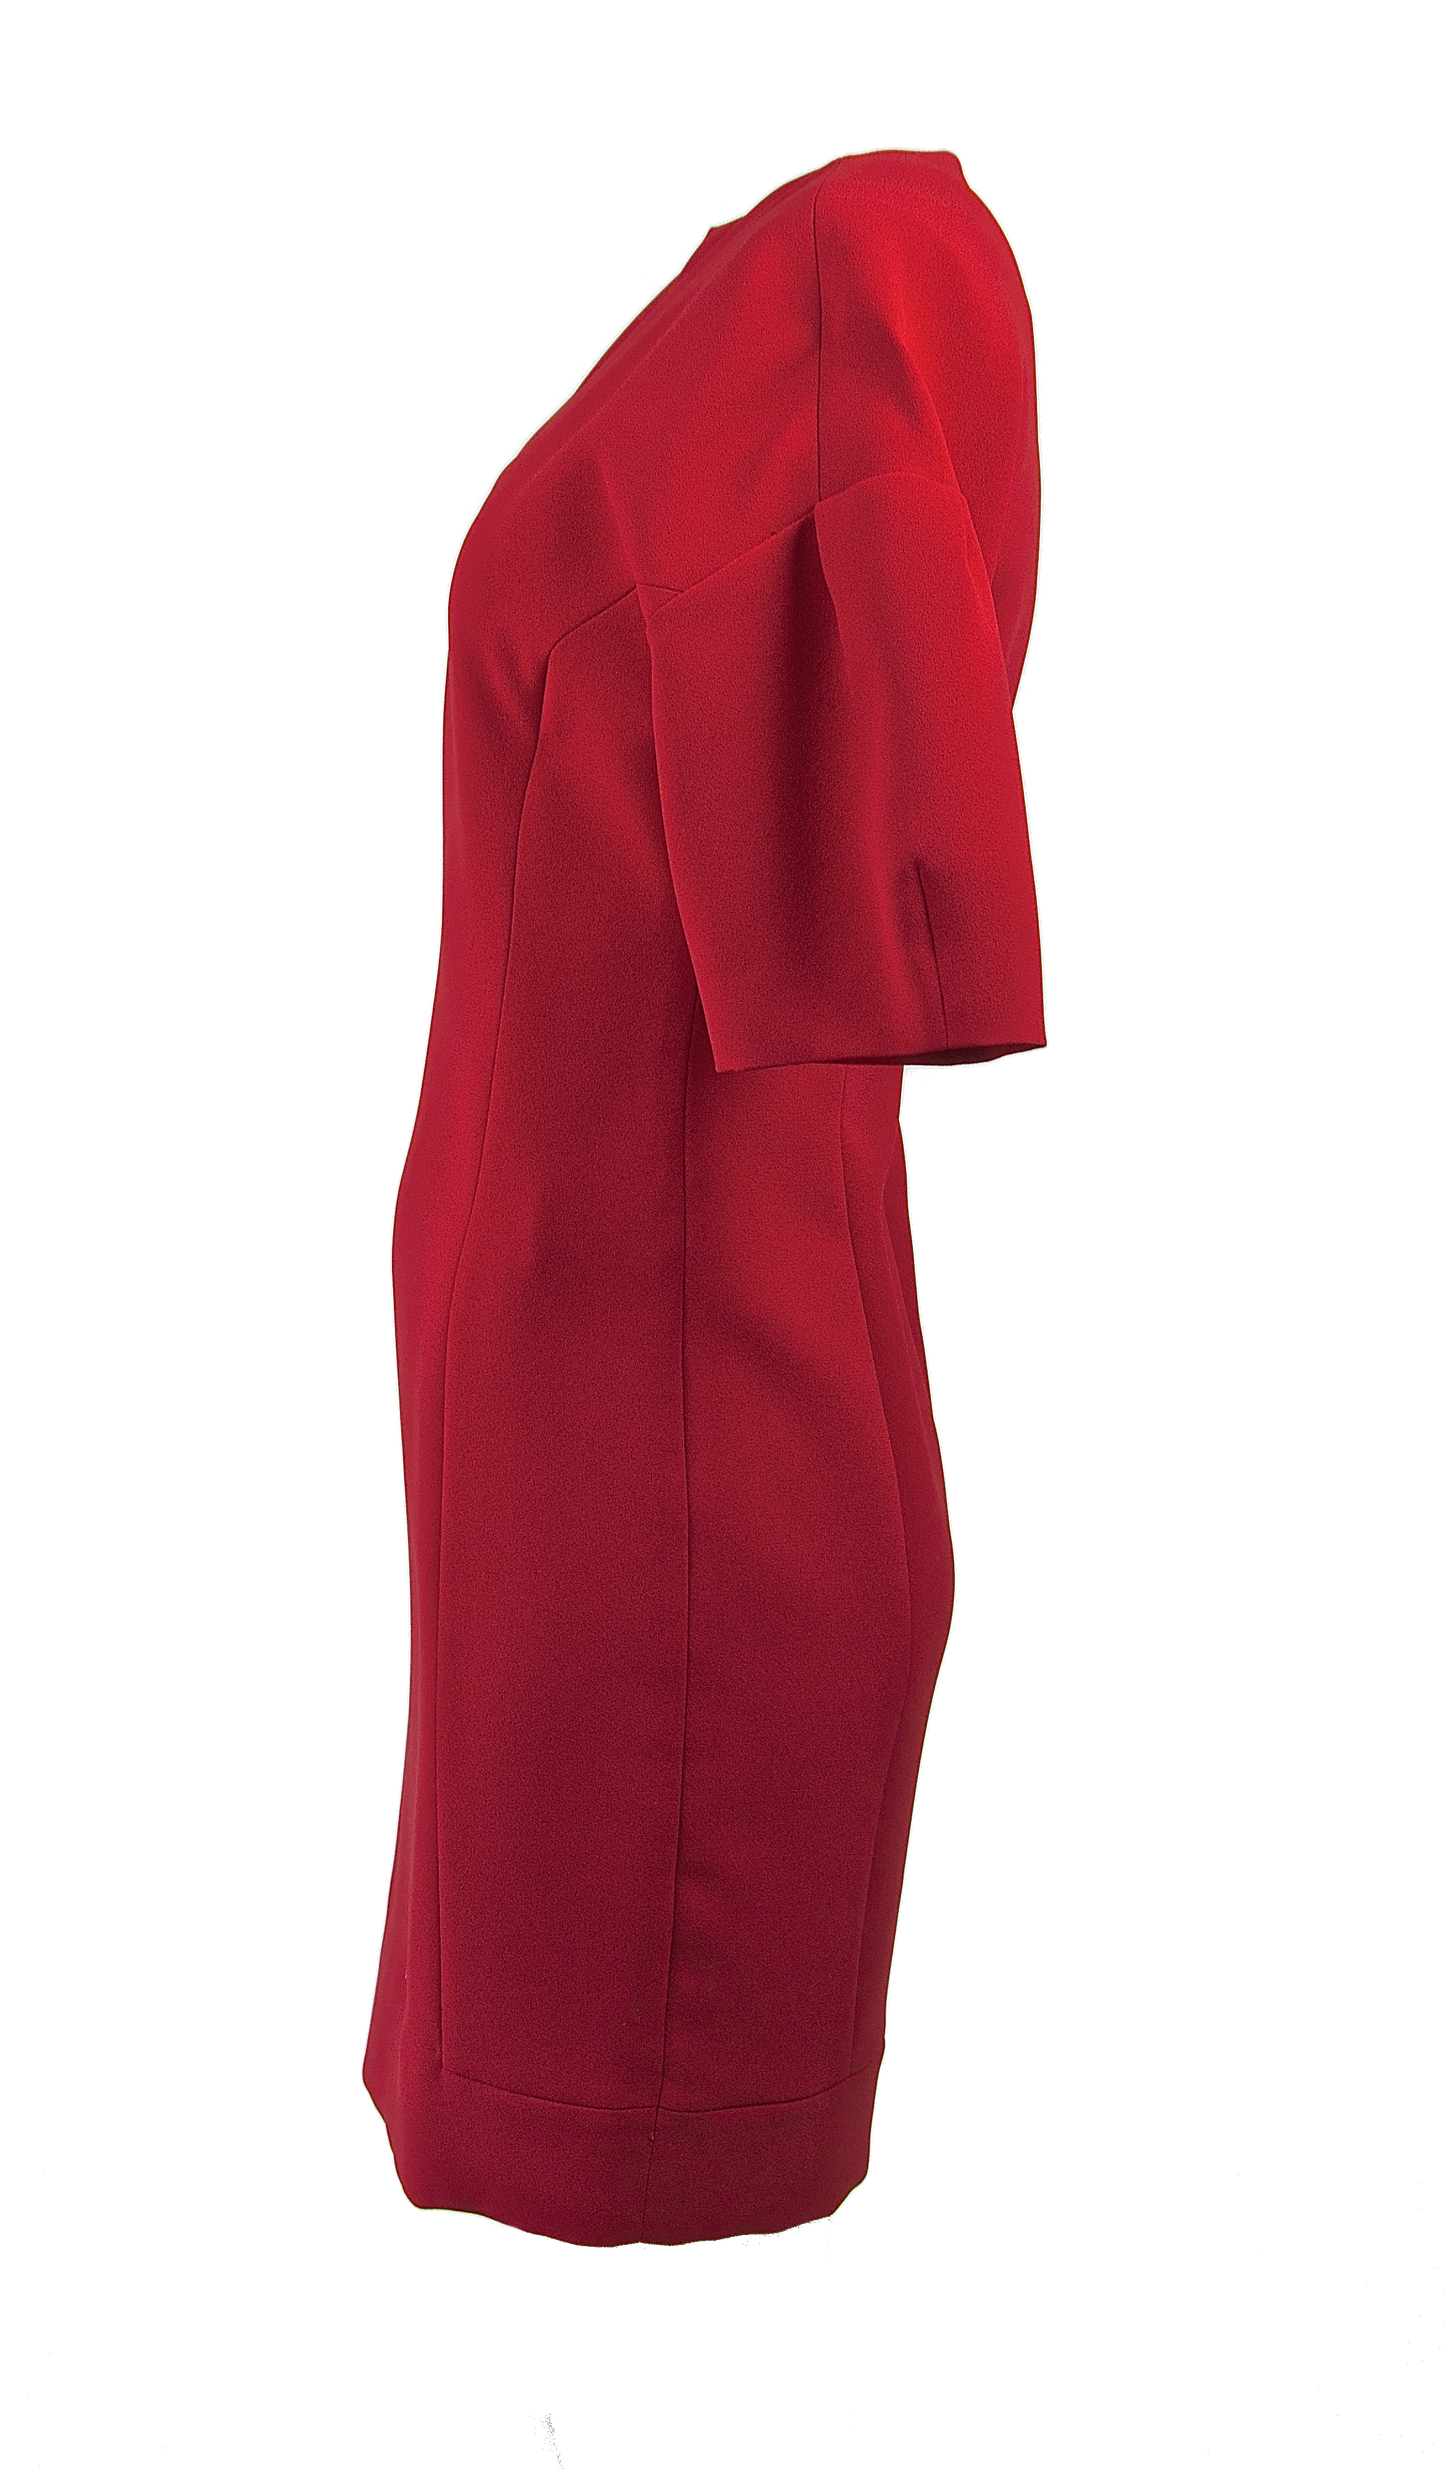 Sheath dress knee length in red